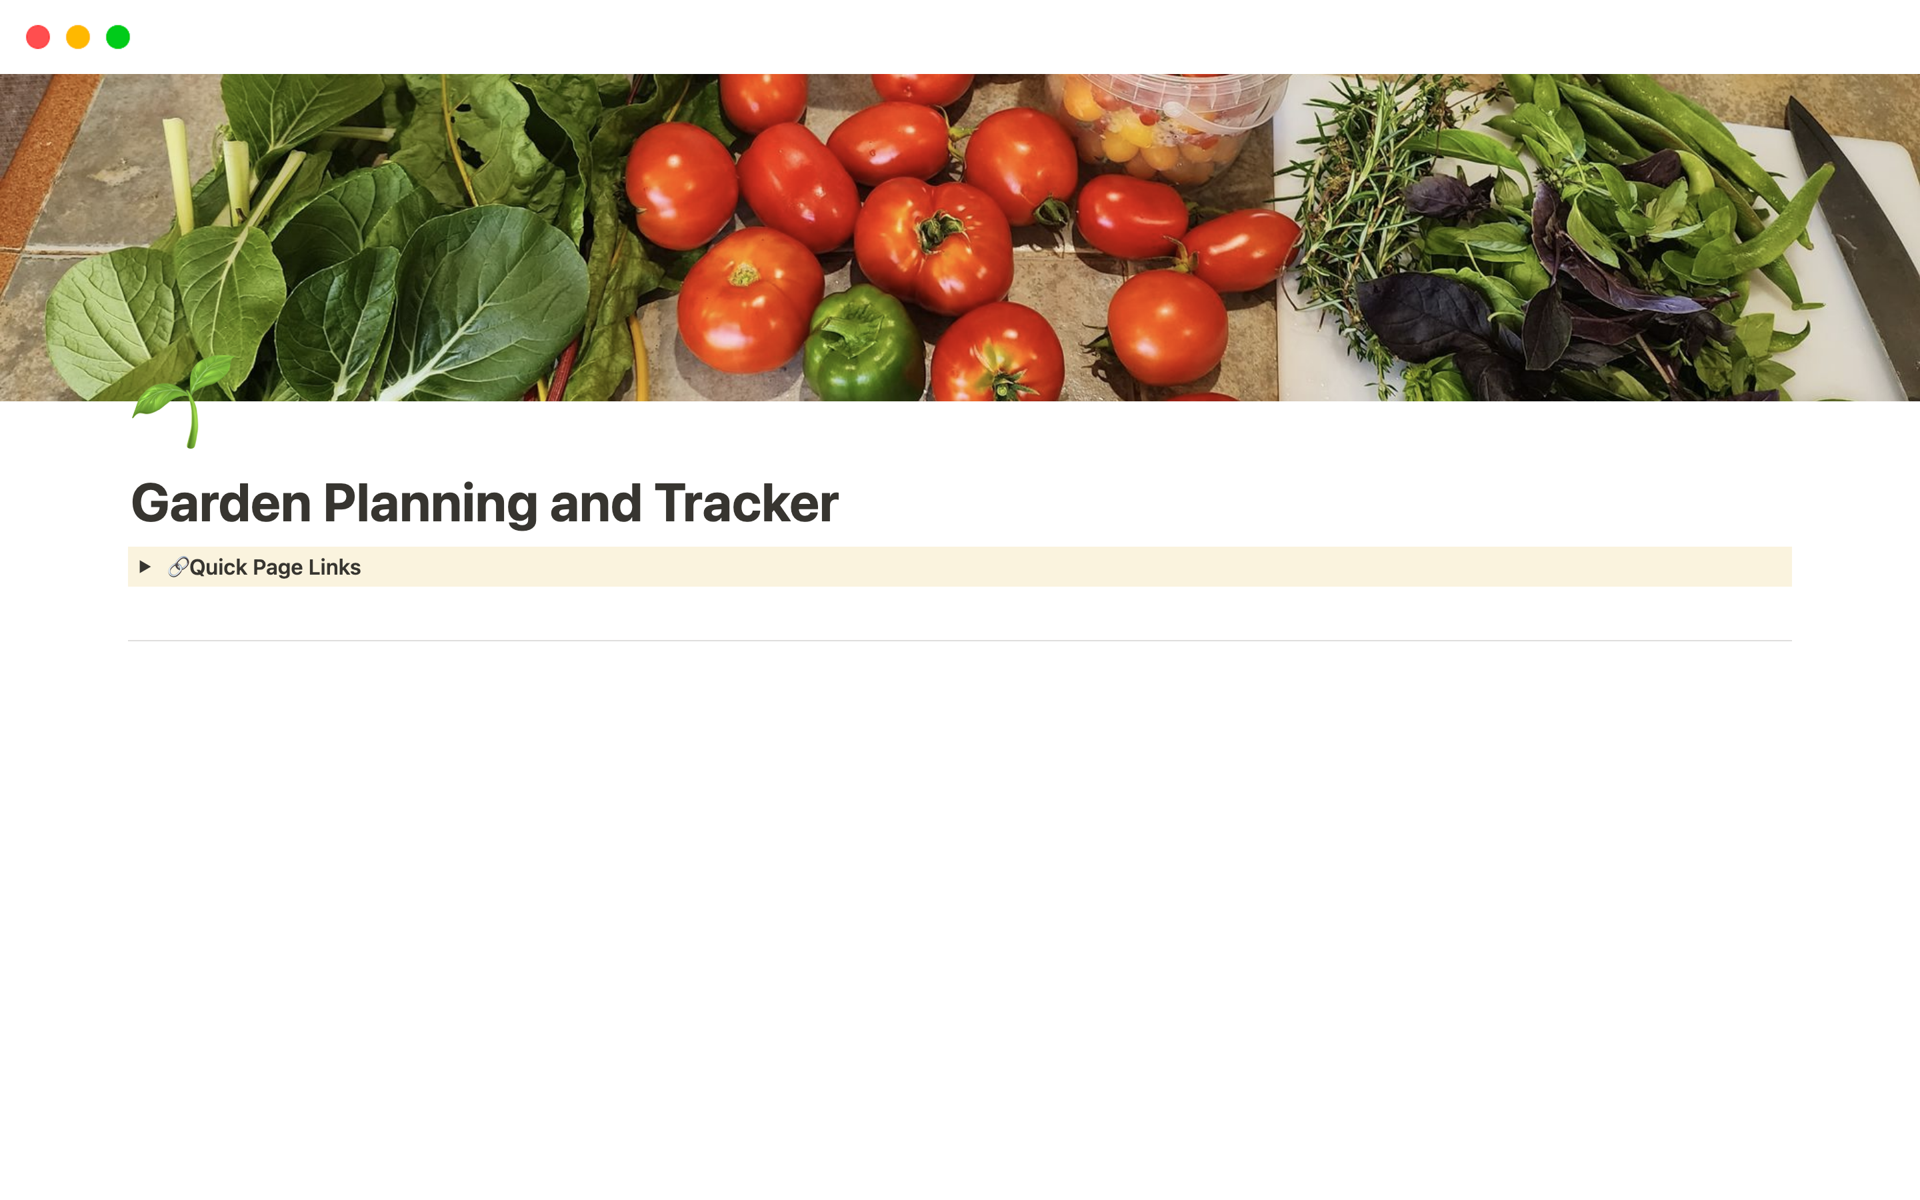 Aperçu du modèle de Garden Planning and Tracker